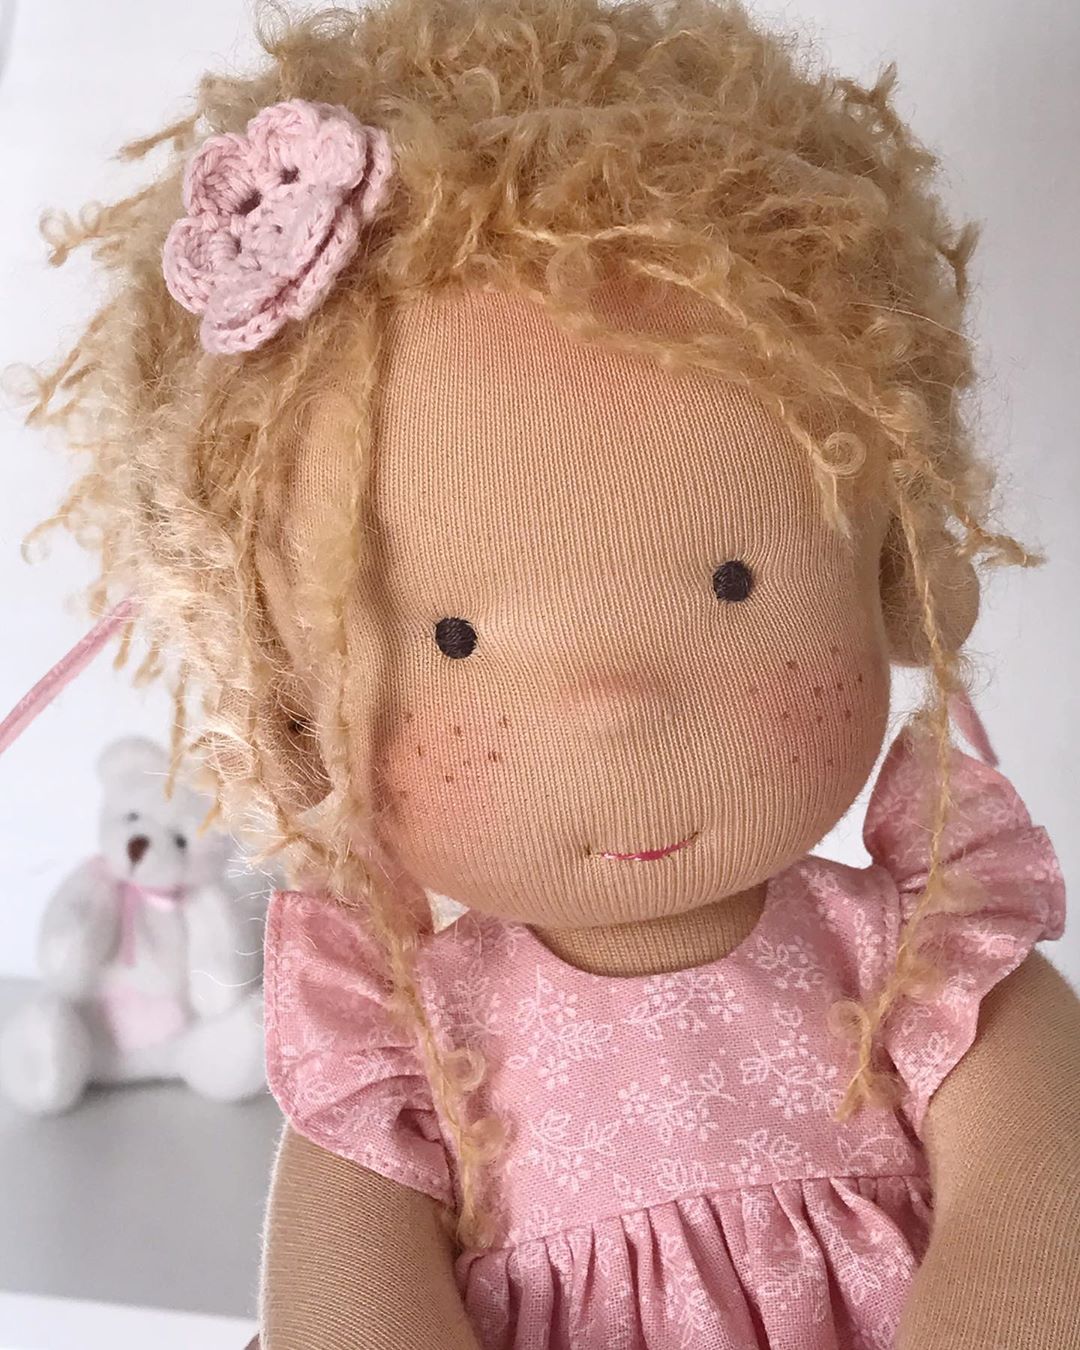 Handmade Knitted Doll - Anila